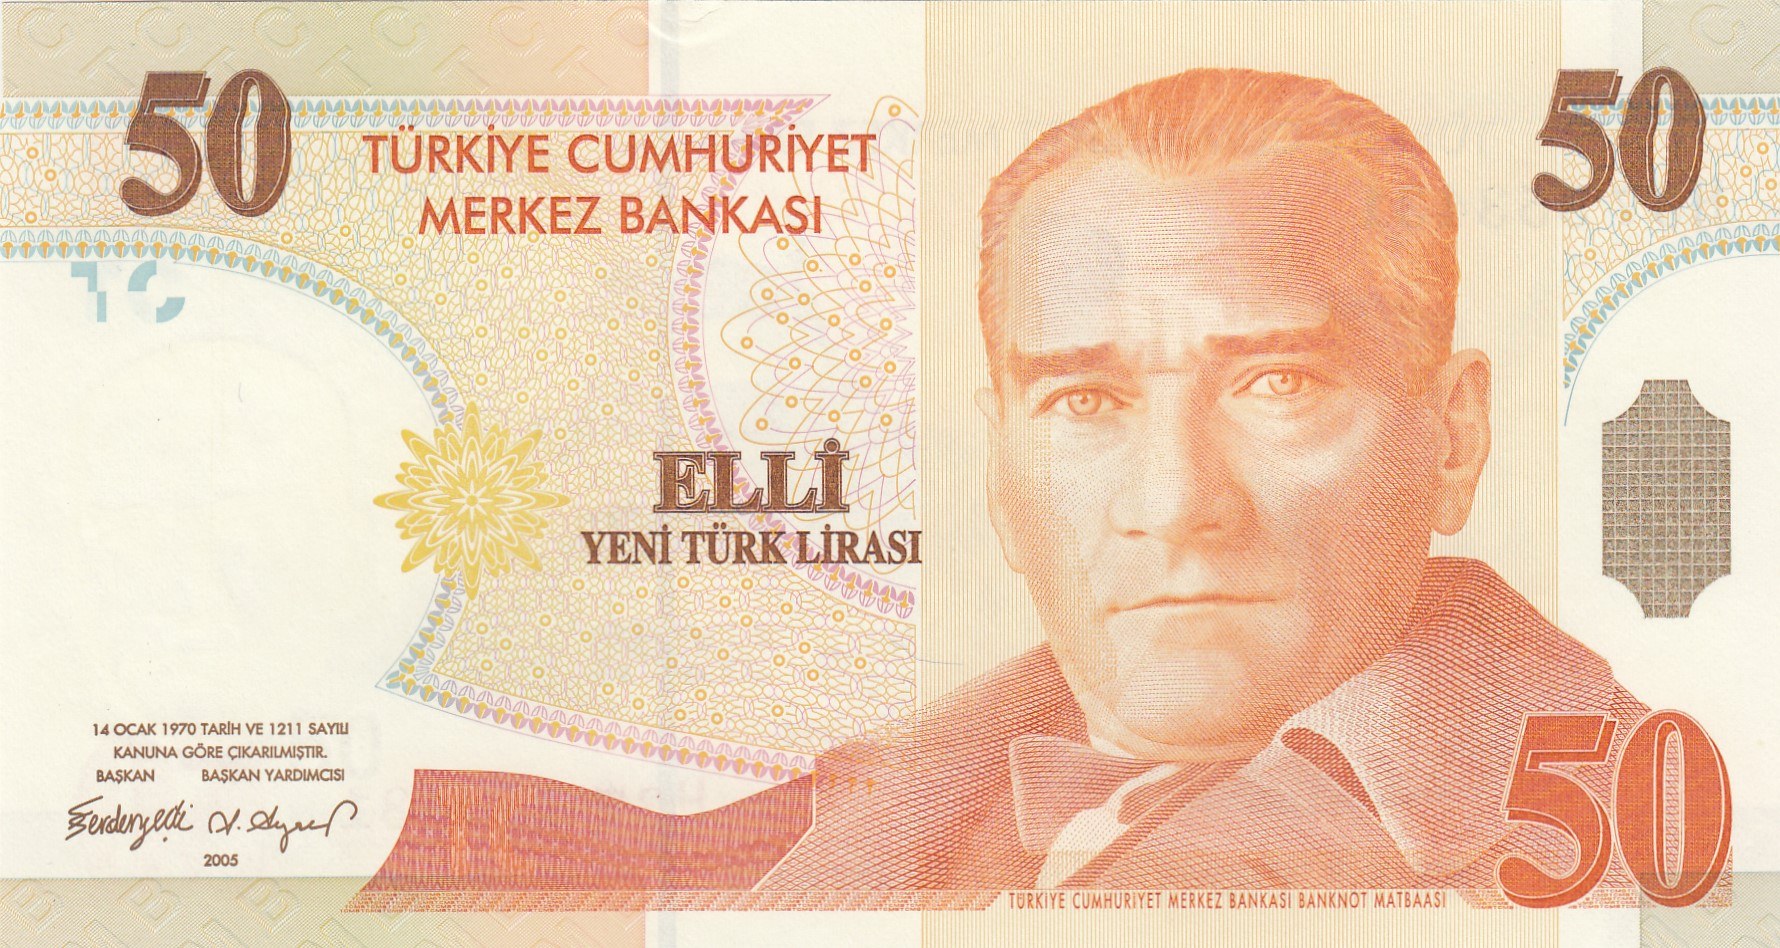 Турецкие лиры купюры. 50 Турецких лир купюра. 50 Лир купюра. Турция 50 лир банкнота. Турецкие банкноты 50 лир.